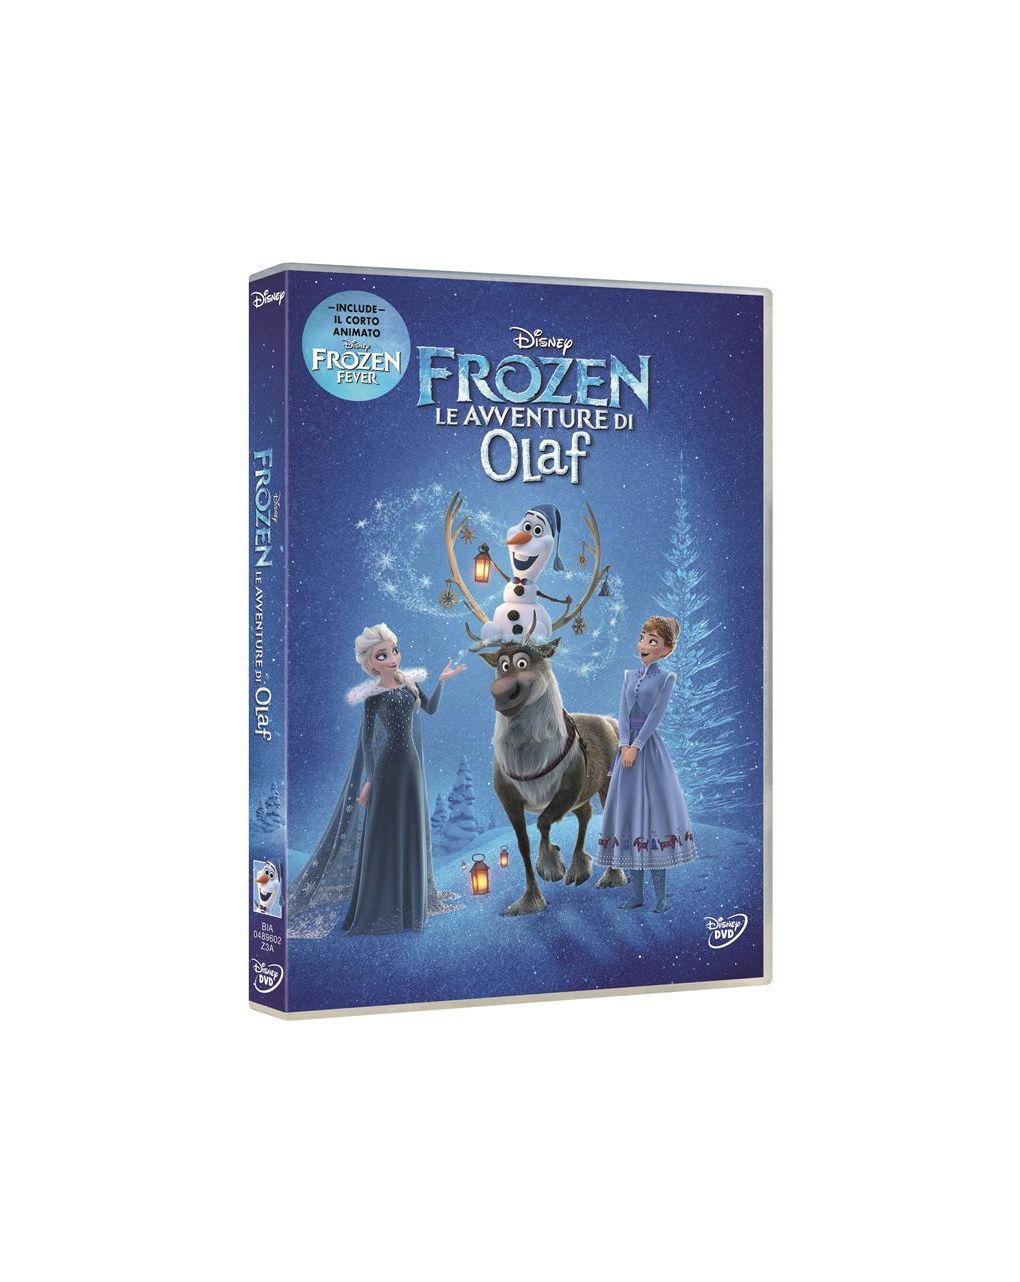 Dvd frozen - le avventure di olaf - Disney